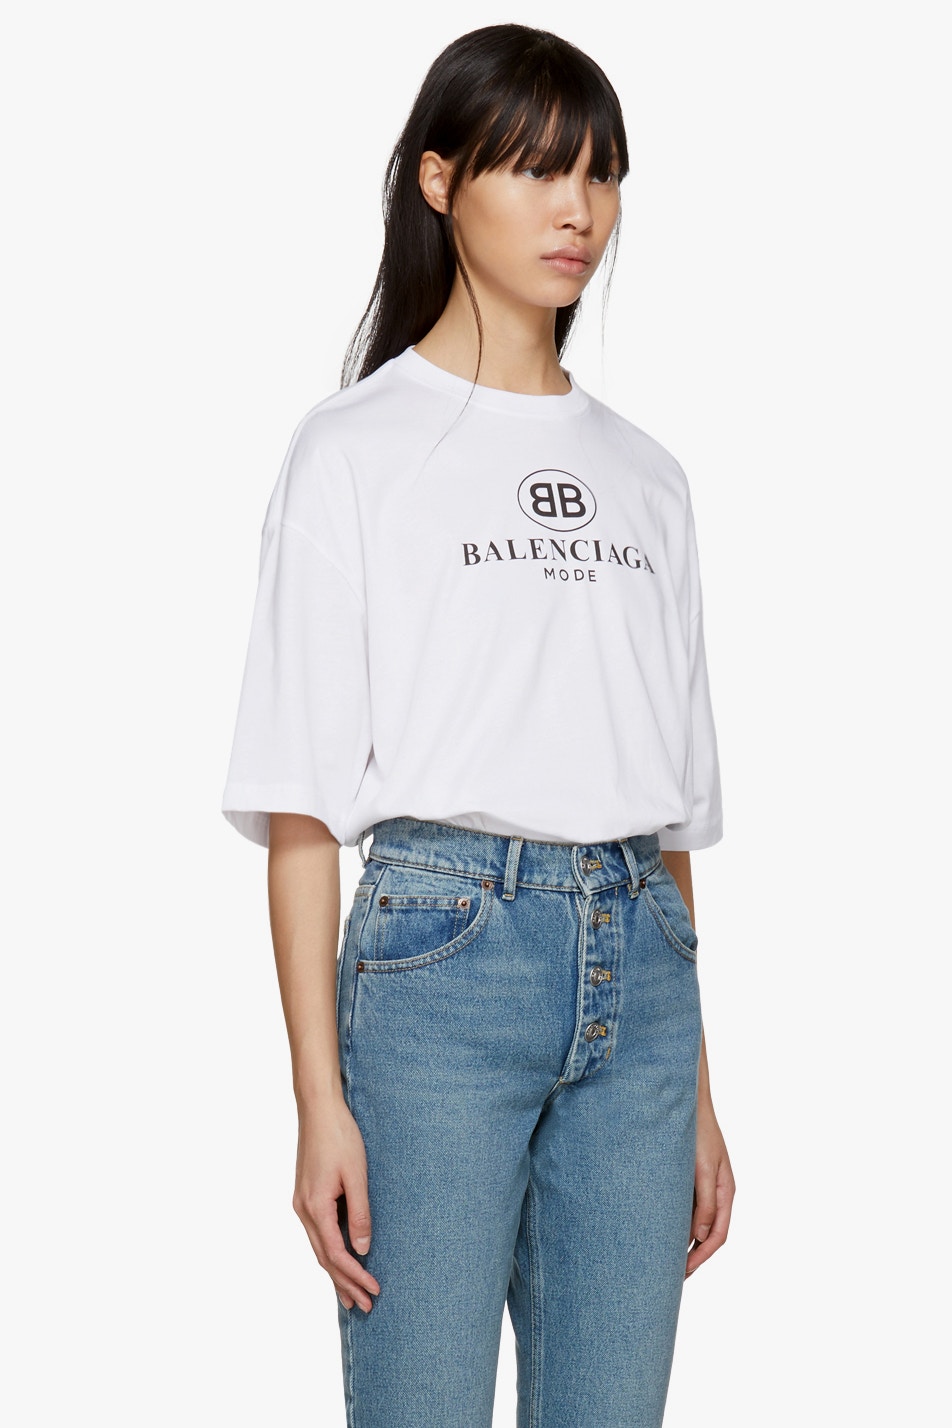 vask titel byrde Will 2018 Be The Year Of The Balenciaga Logo Tee? — CNK Daily (ChicksNKicks)